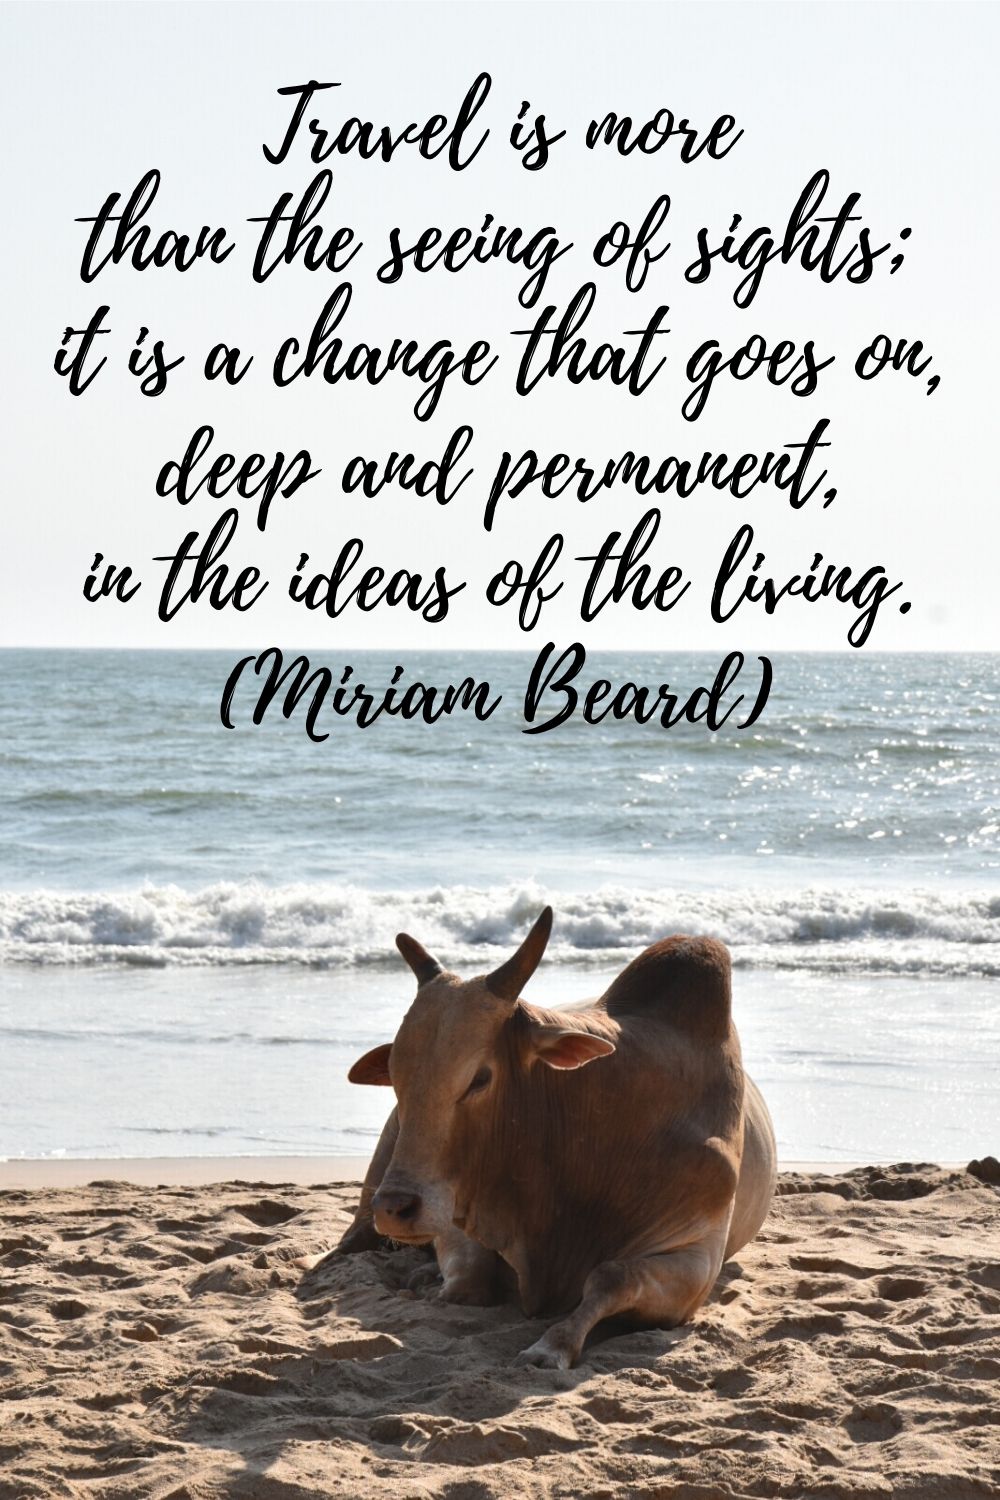 travel quotes by women - Miriam Beard